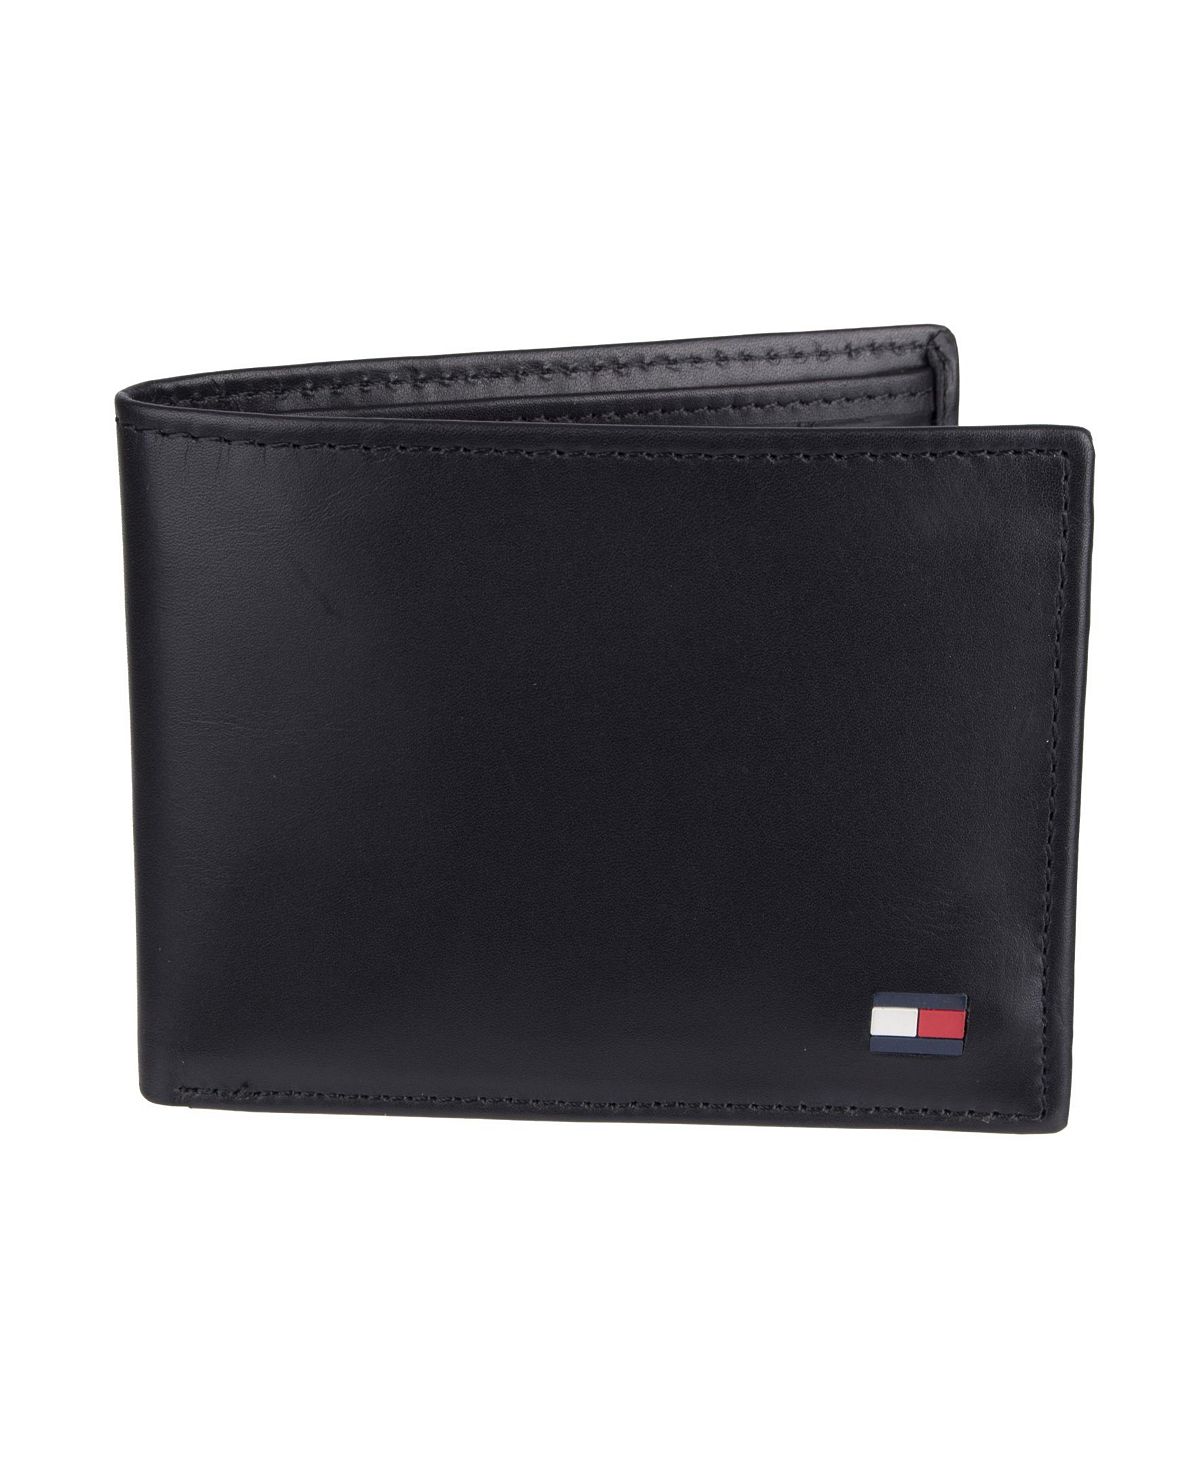 Мужской кожаный кошелек Passcase Tommy Hilfiger columbia кошелек wallace passcase размер без размера